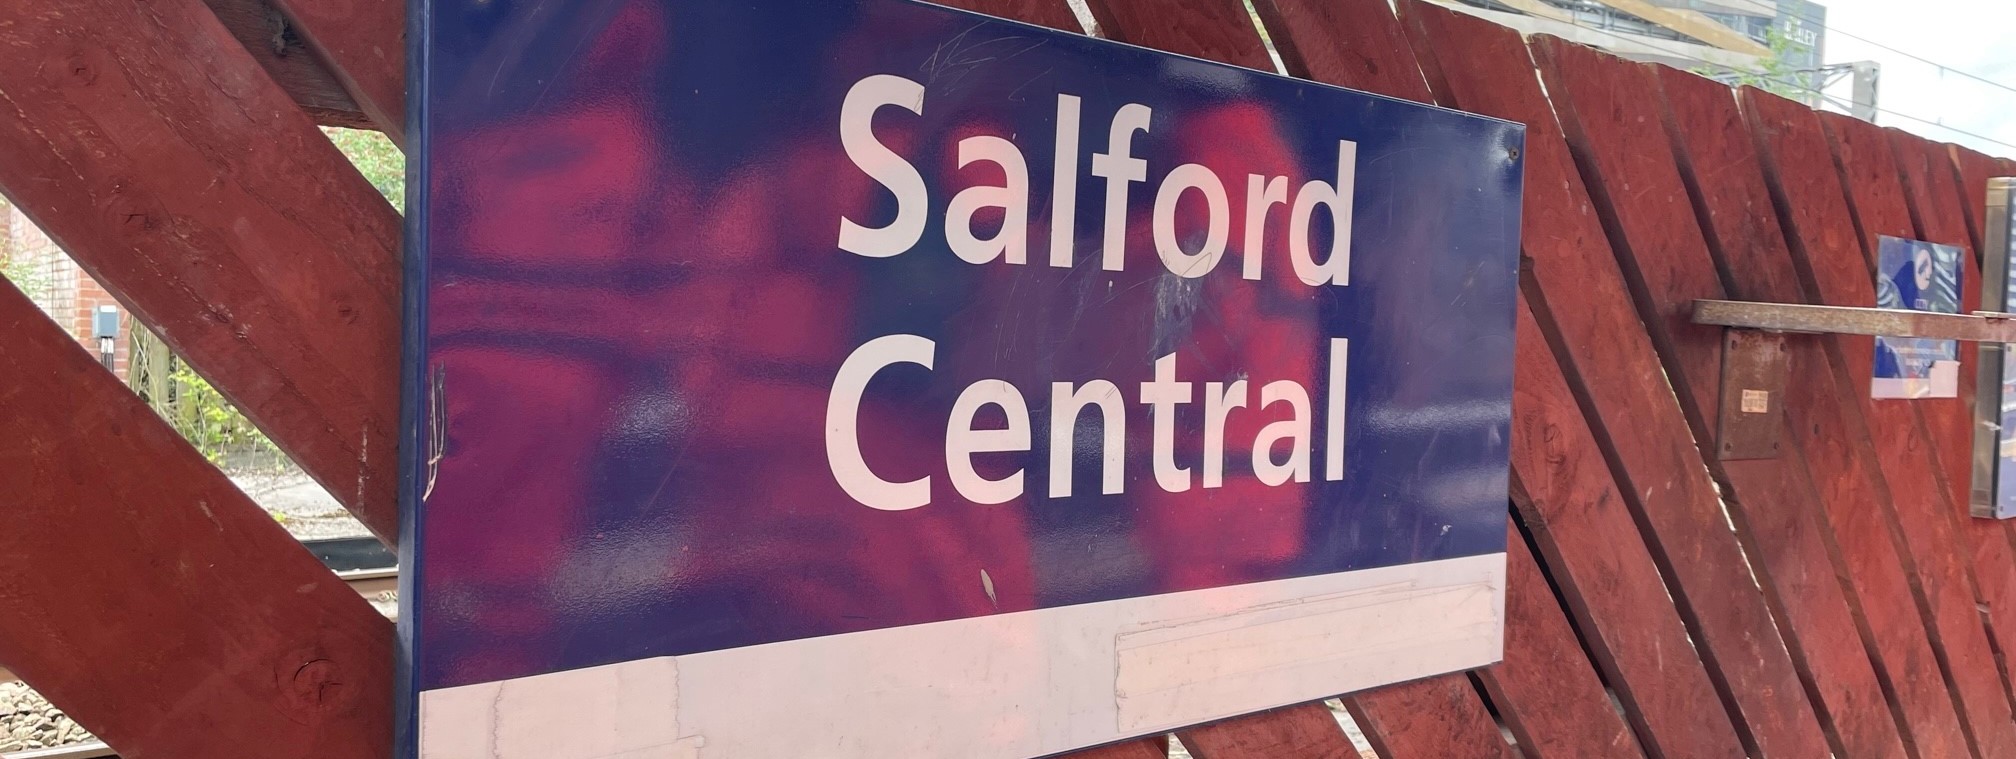 image-shows-salford-central-station-signage